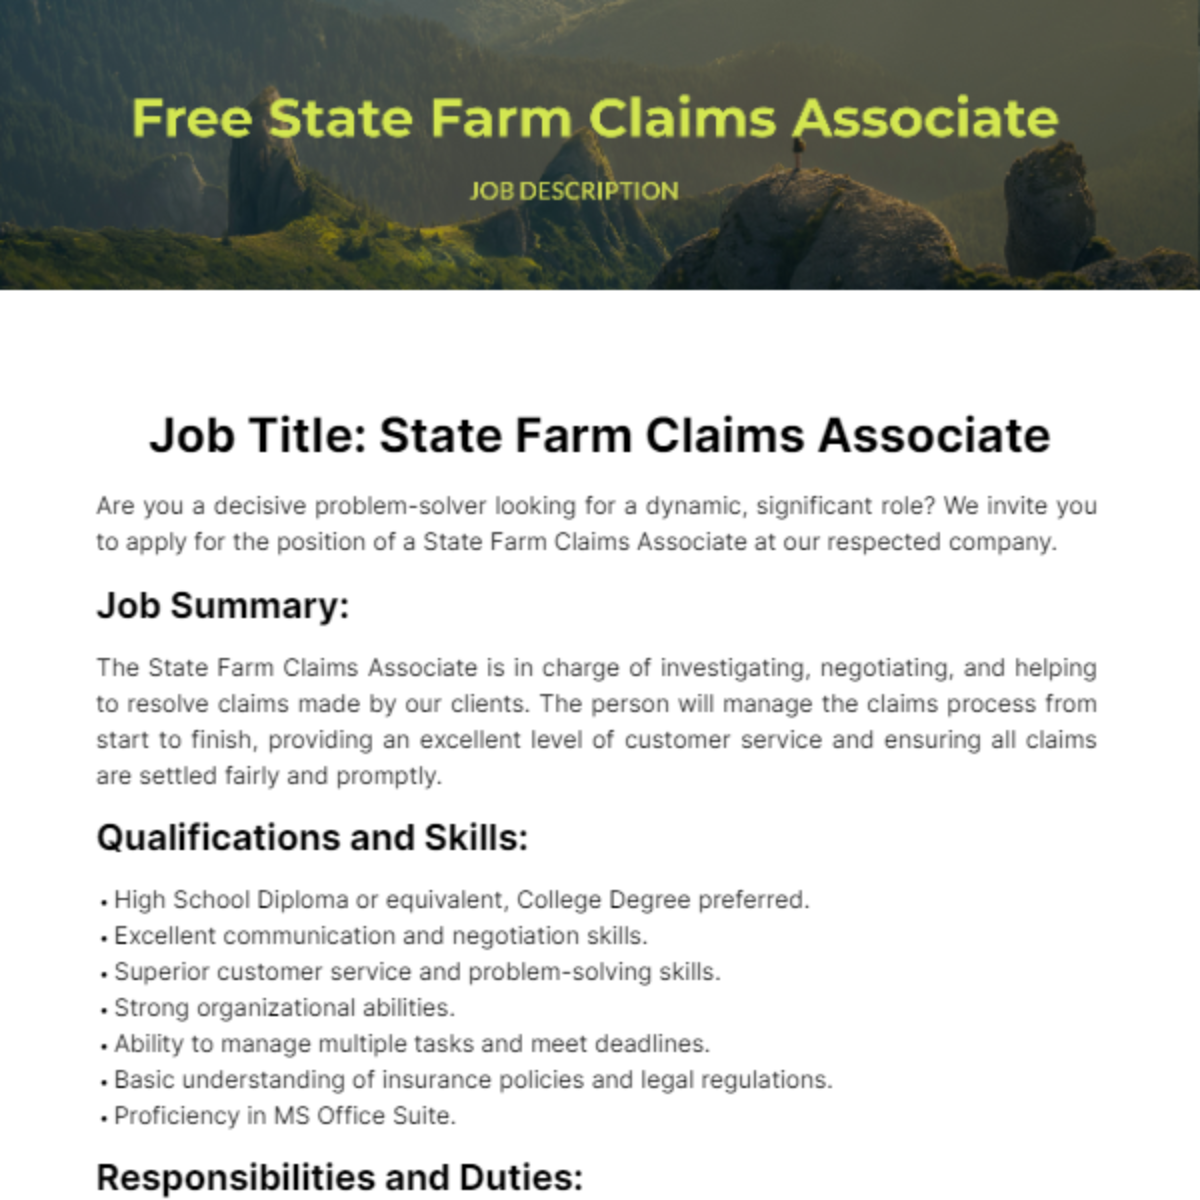 Free State Farm Claims Associate Job Description Template